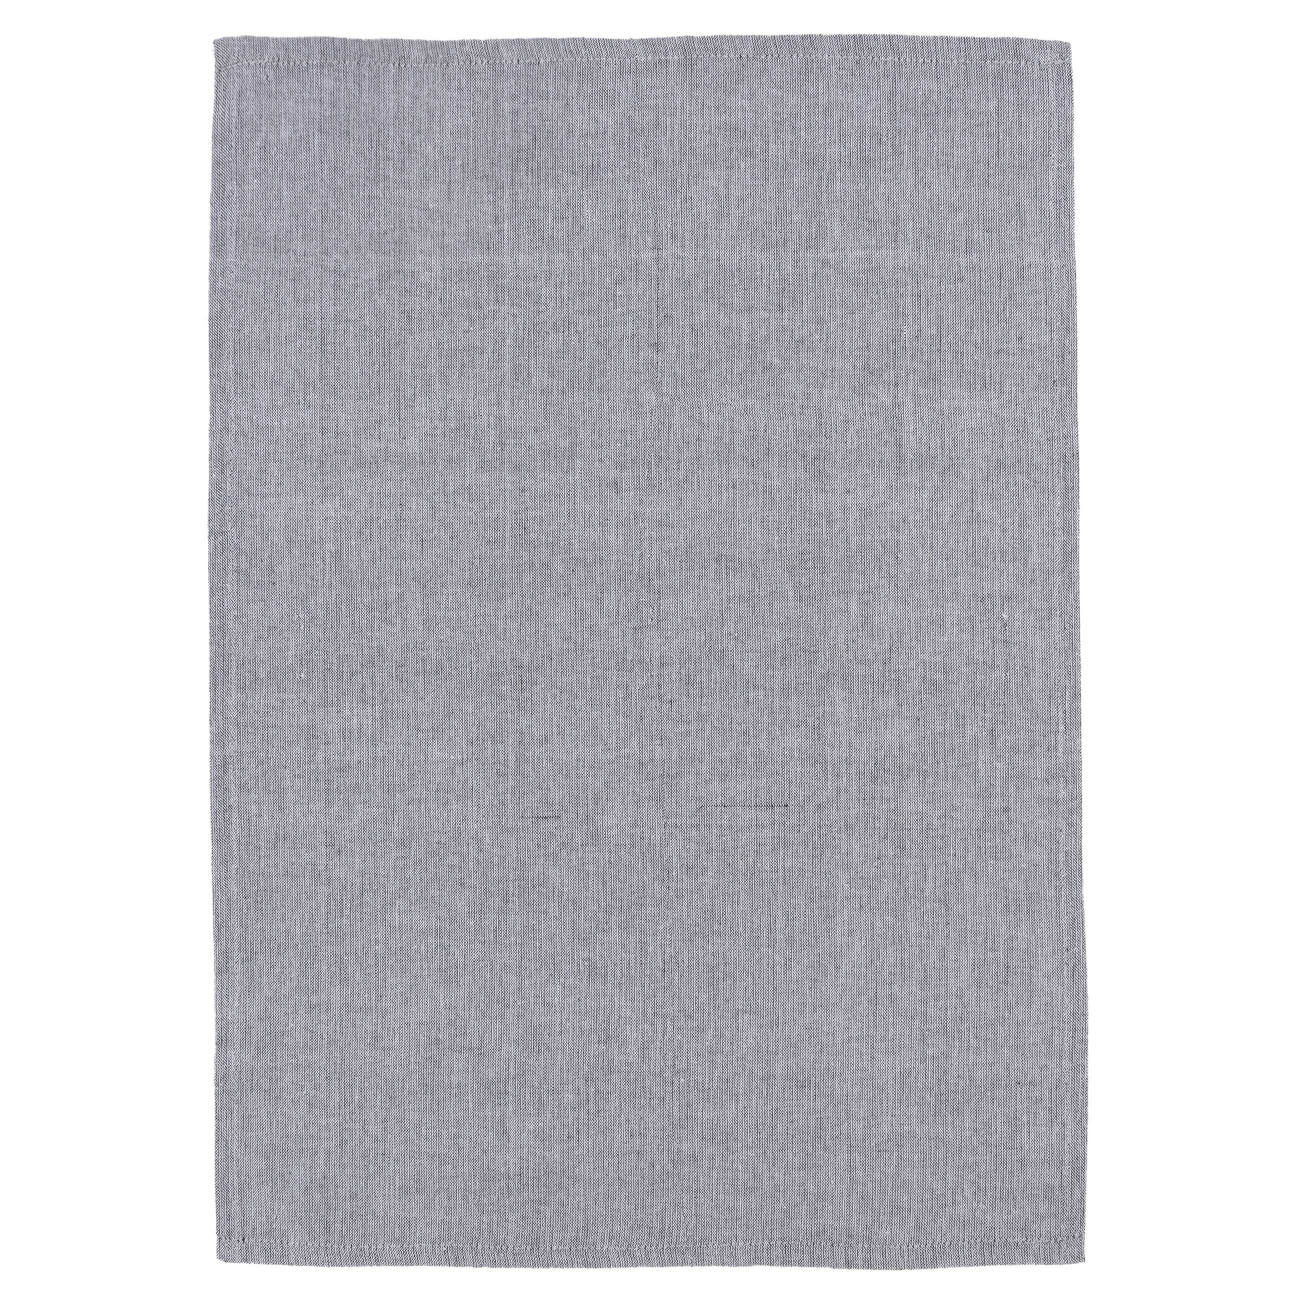 Полотенце кухонное, 40х60 см, хлопок, серый меланж, Melange grey